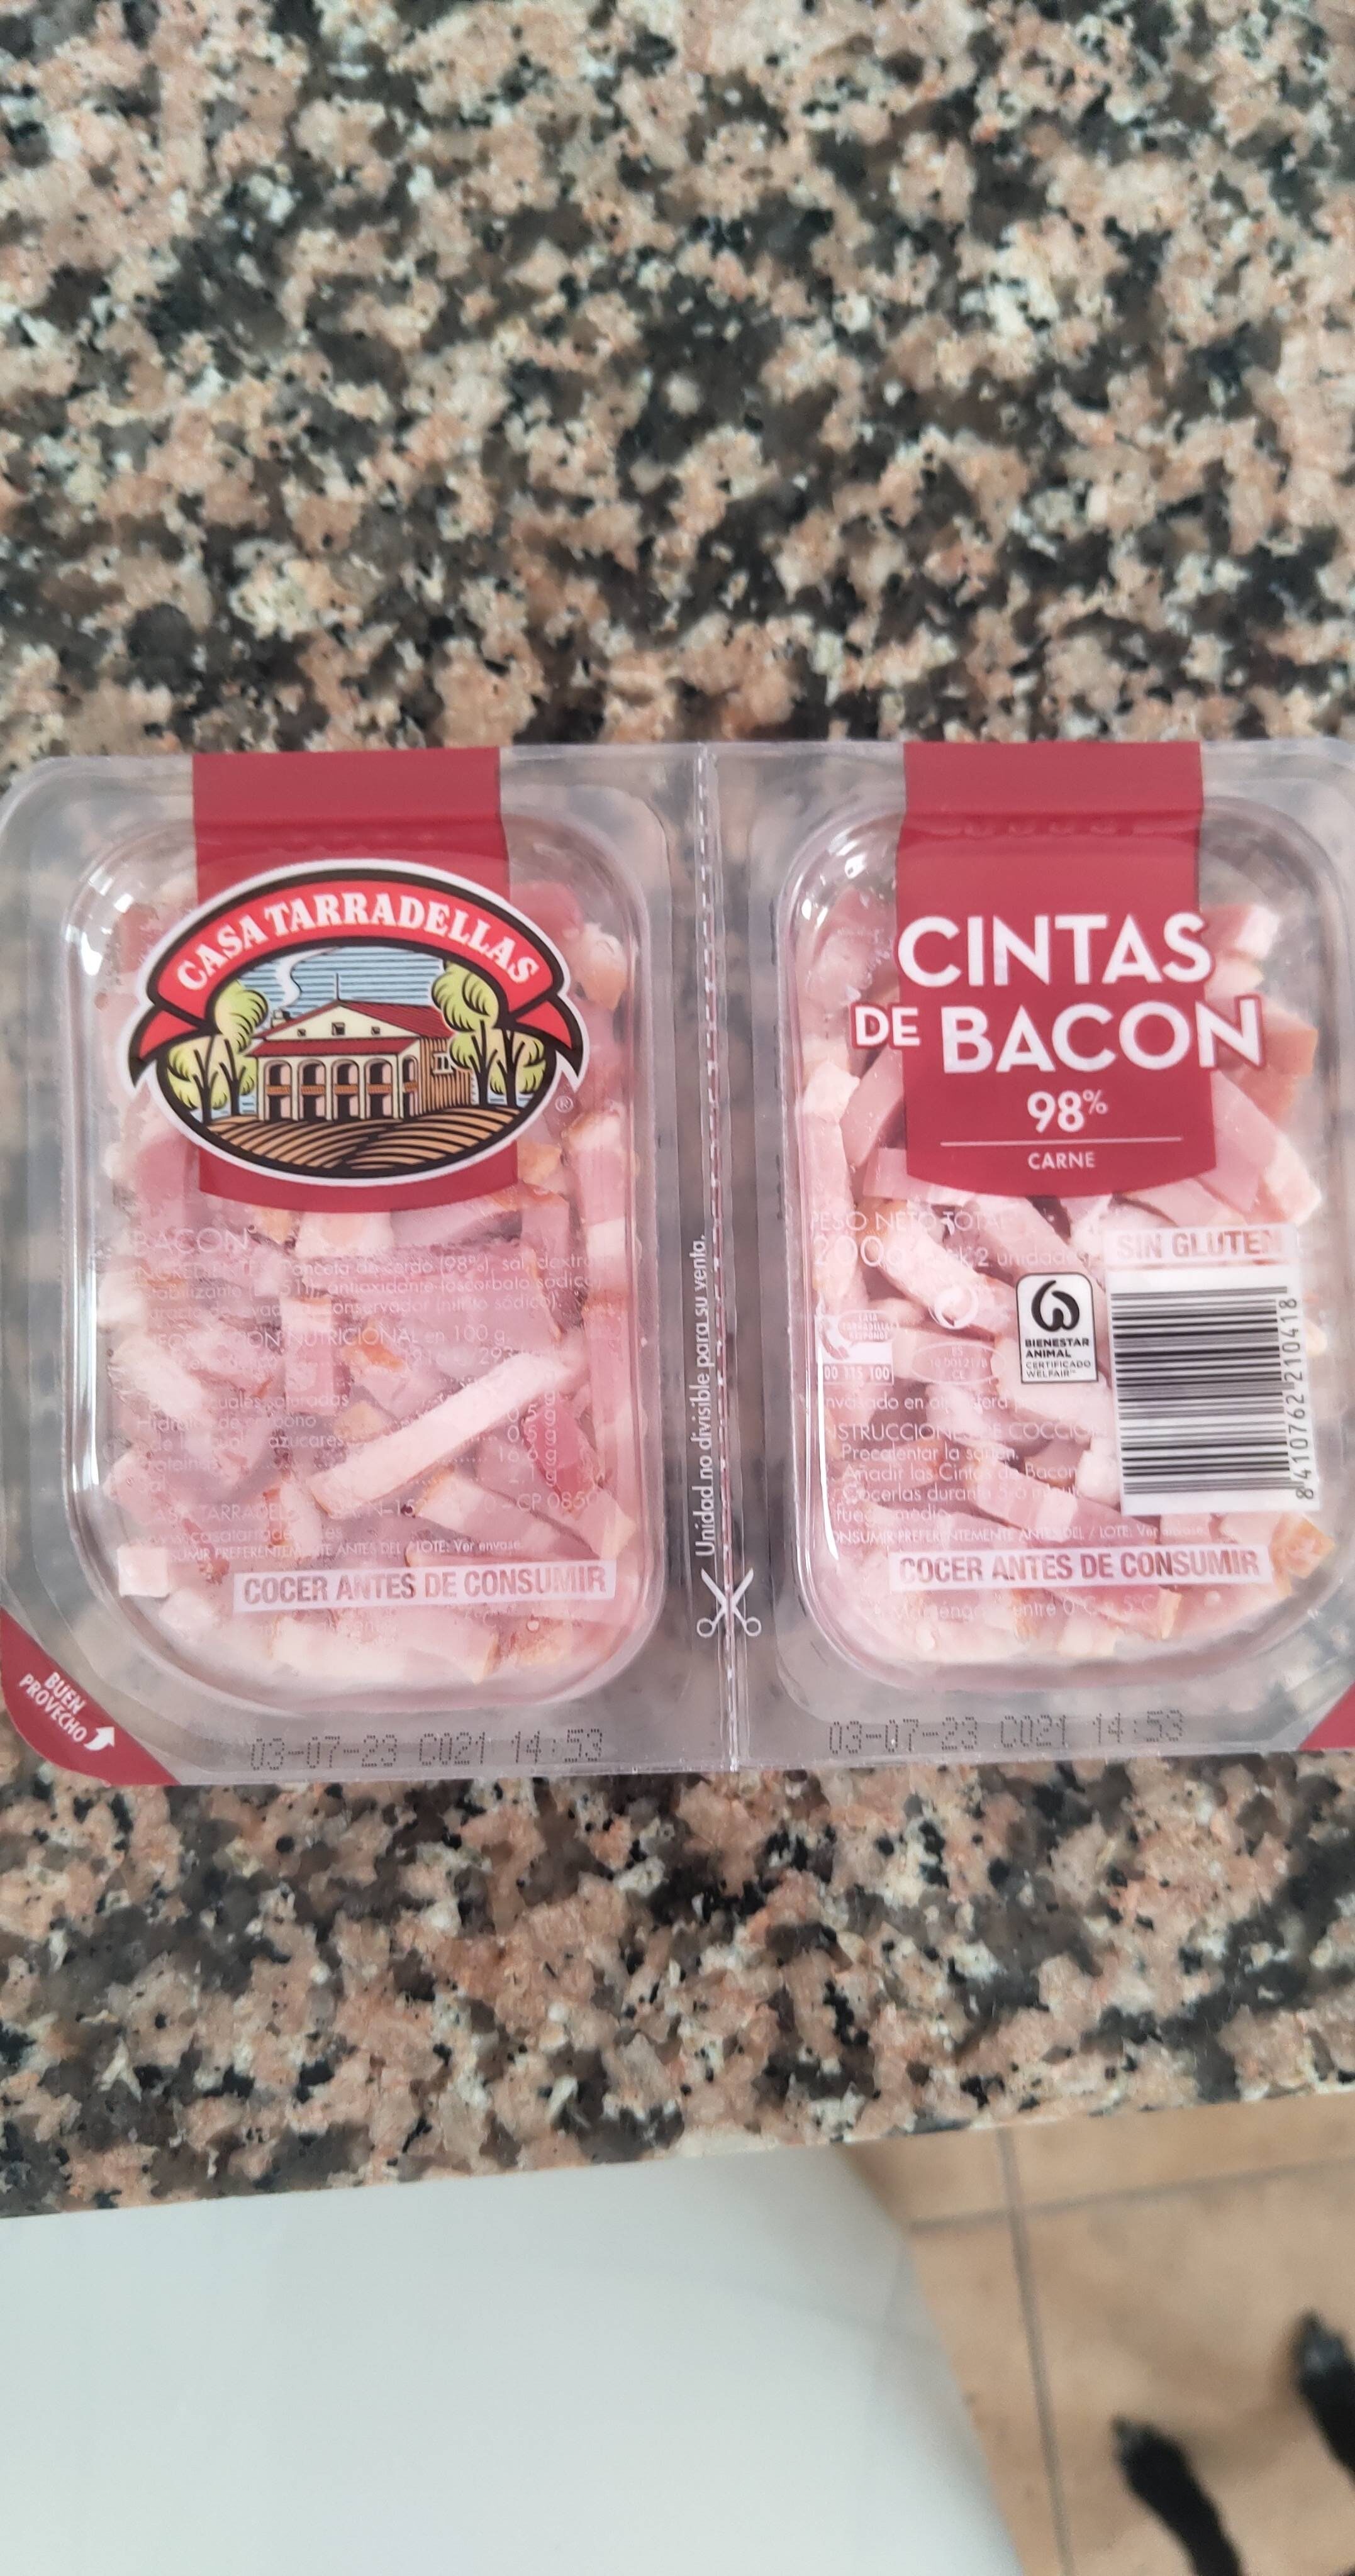 Cintas de bacon sin gluten - Product